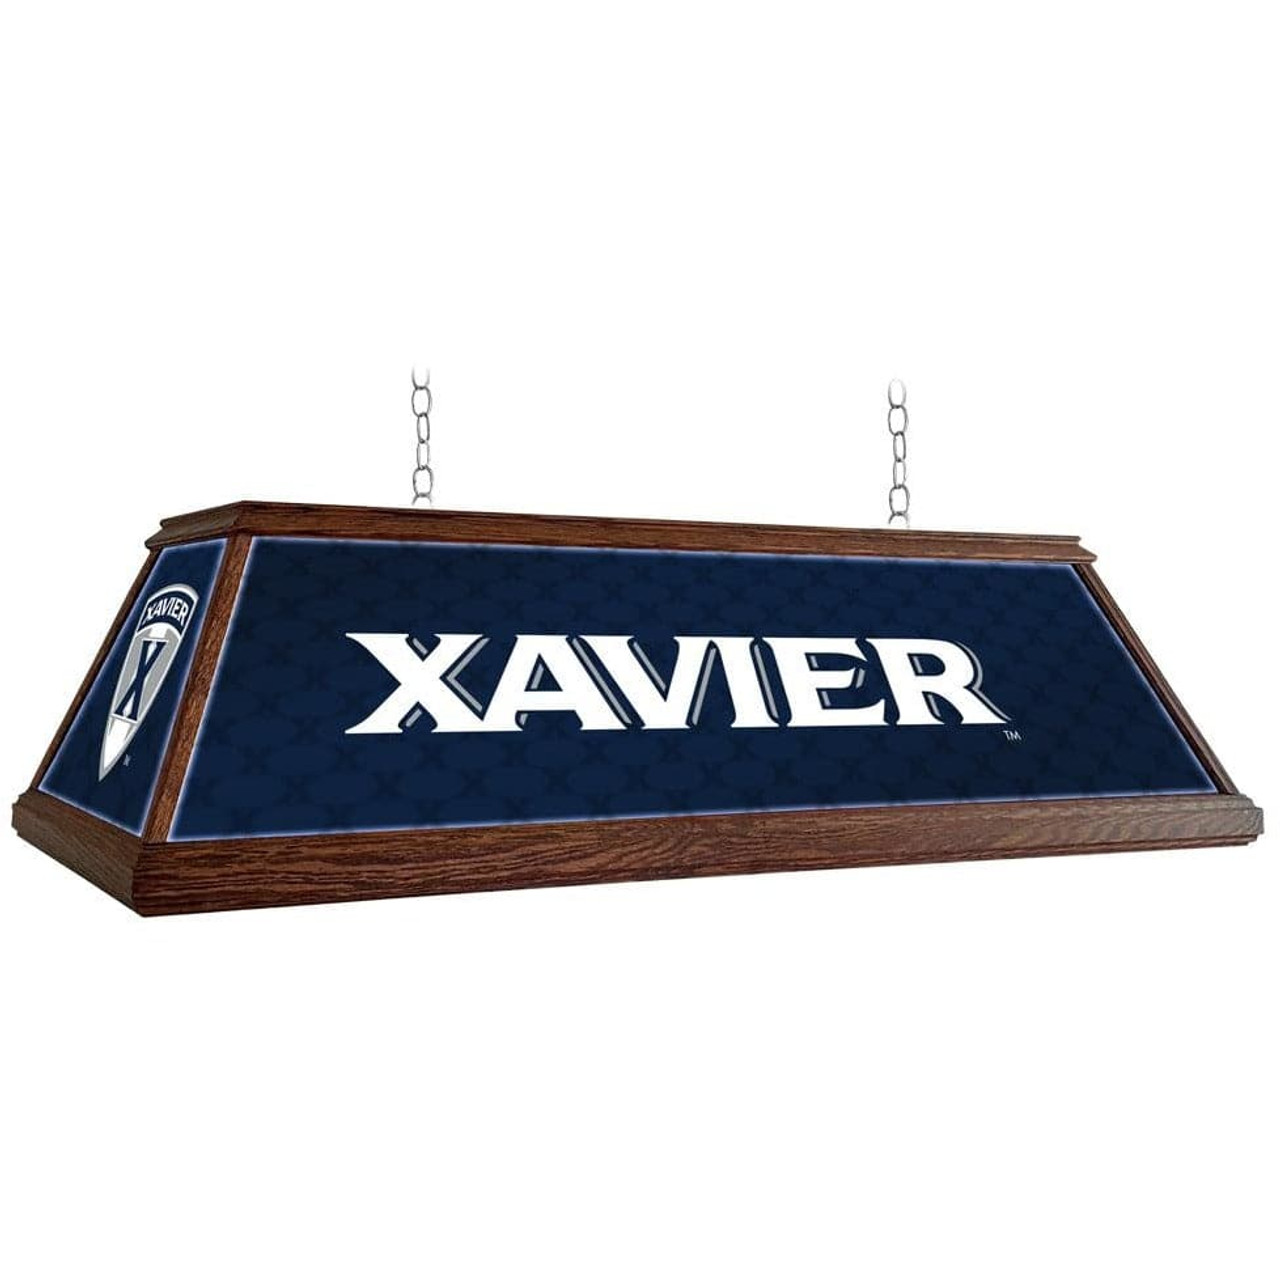 Xavier, XAV, Musketeers, Premium, Wood, Billiard, Pool, Table, Light, Lamp, NCXVRM-330-01A, NCXVRM-330-01B, The Fan-Brand, 686082105781